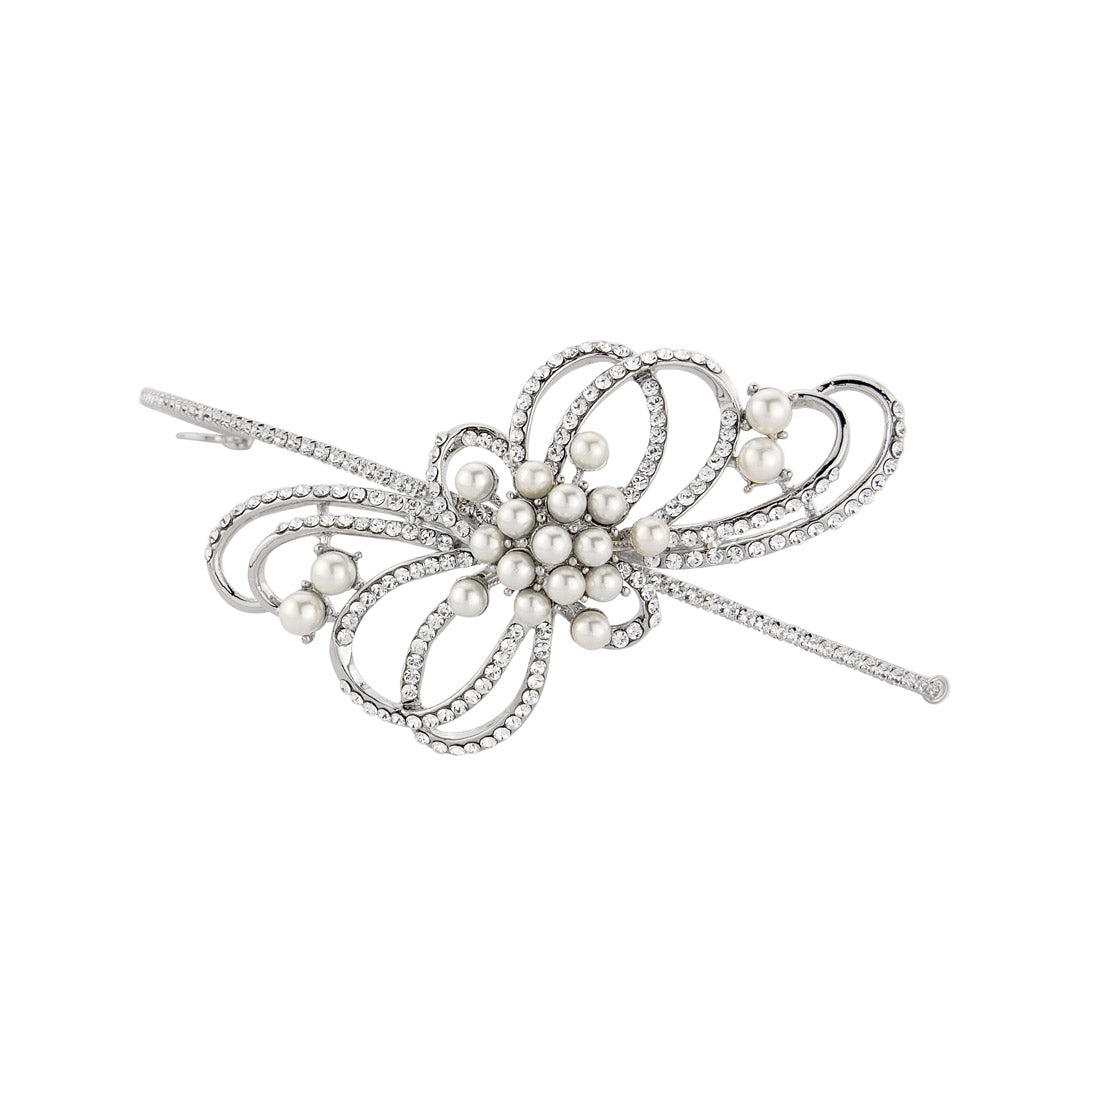 Ribbons and Pearls Crystal & Pearl Bow Wedding Side Tiara